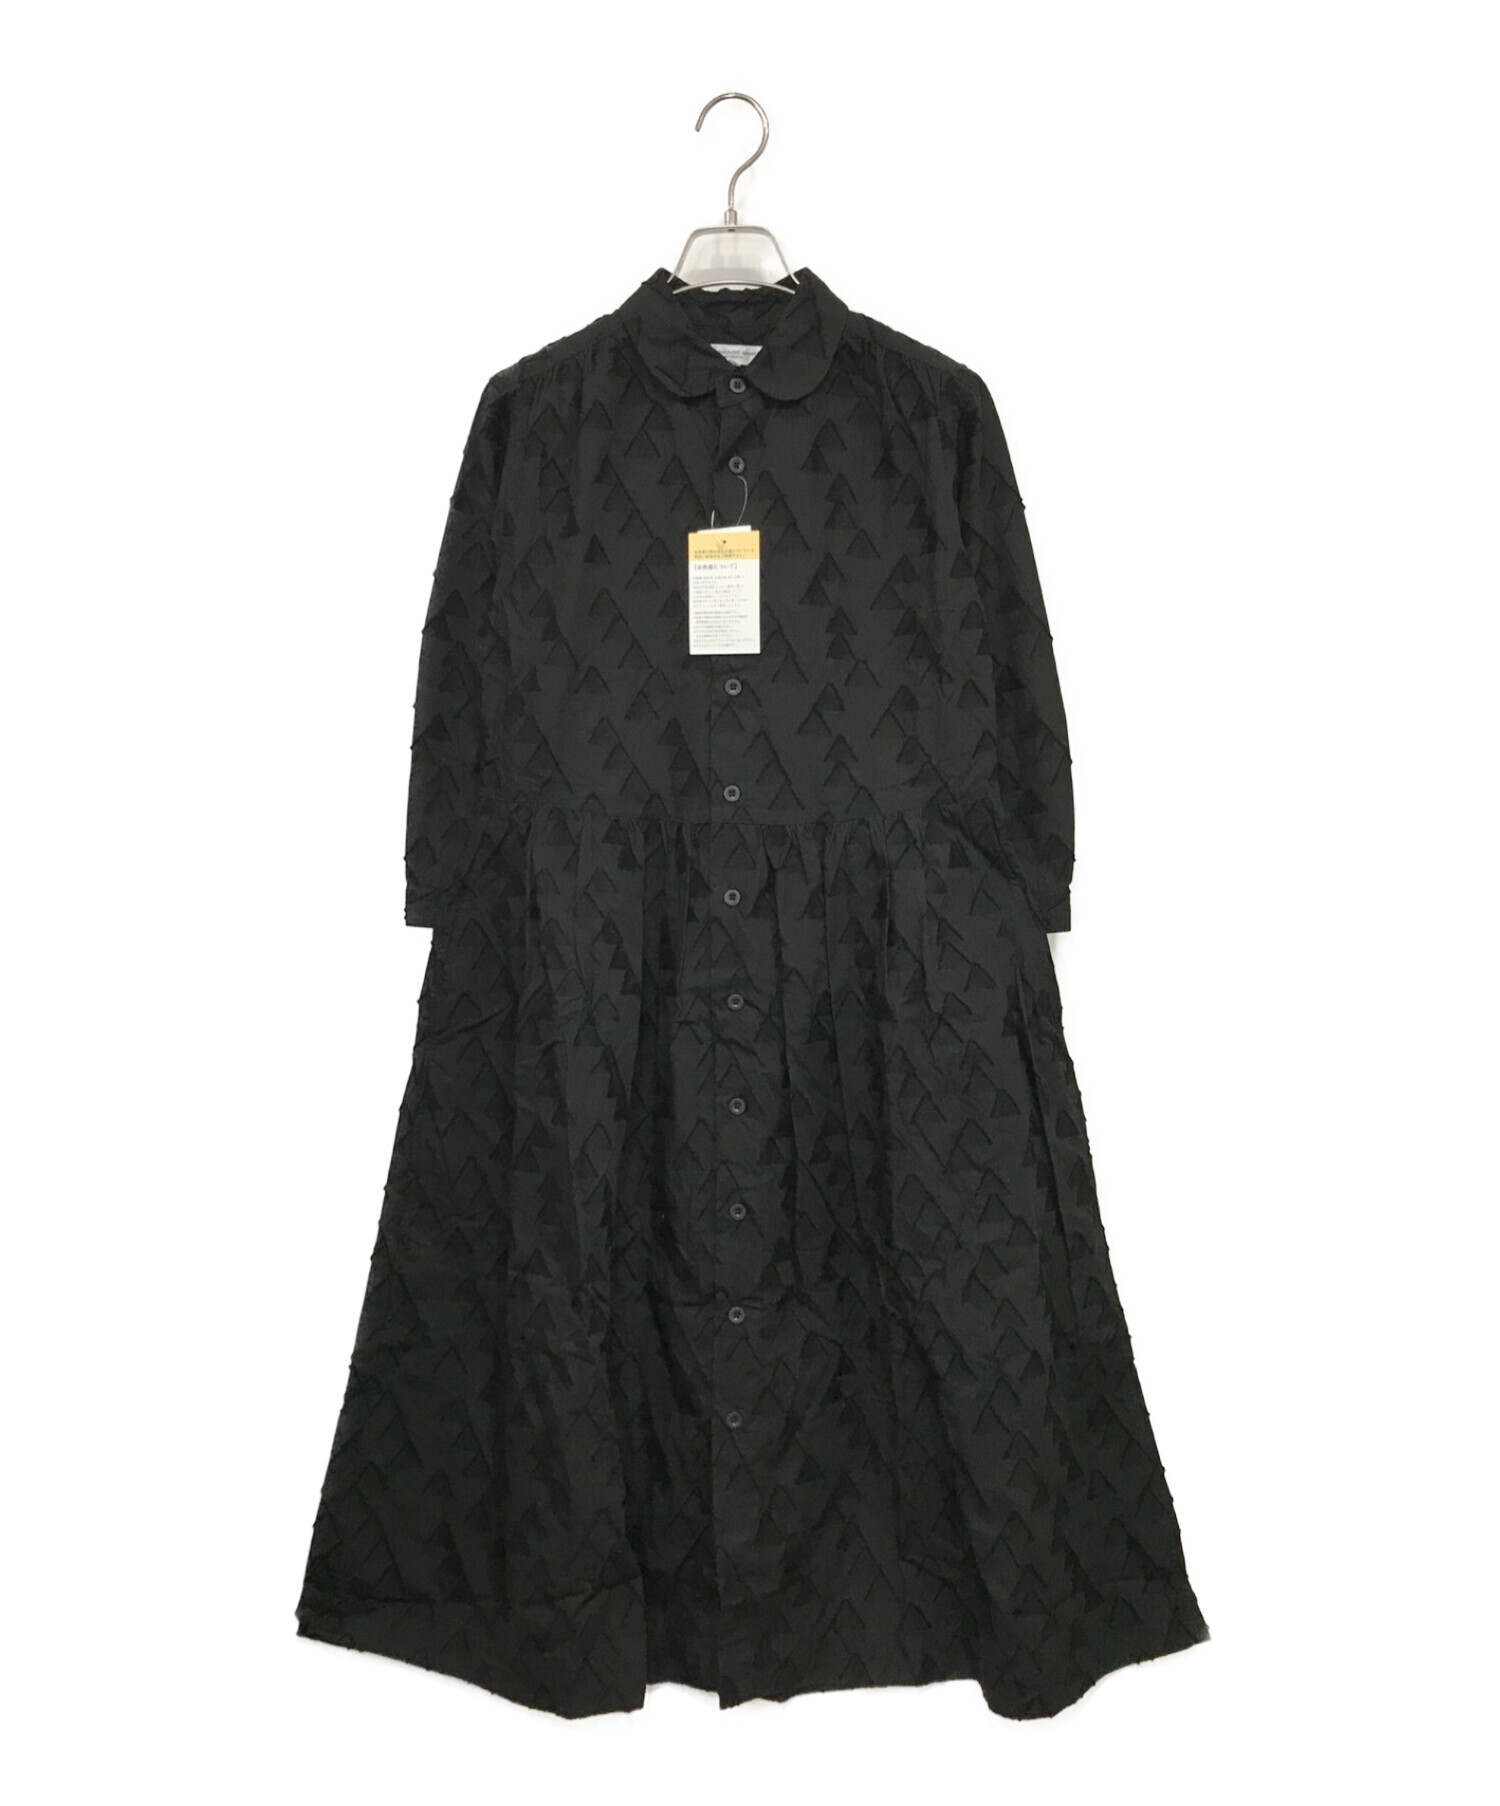 MORIKAGE SHIRT (モリカゲシャツ) シャツワンピース ブラック サイズ:S